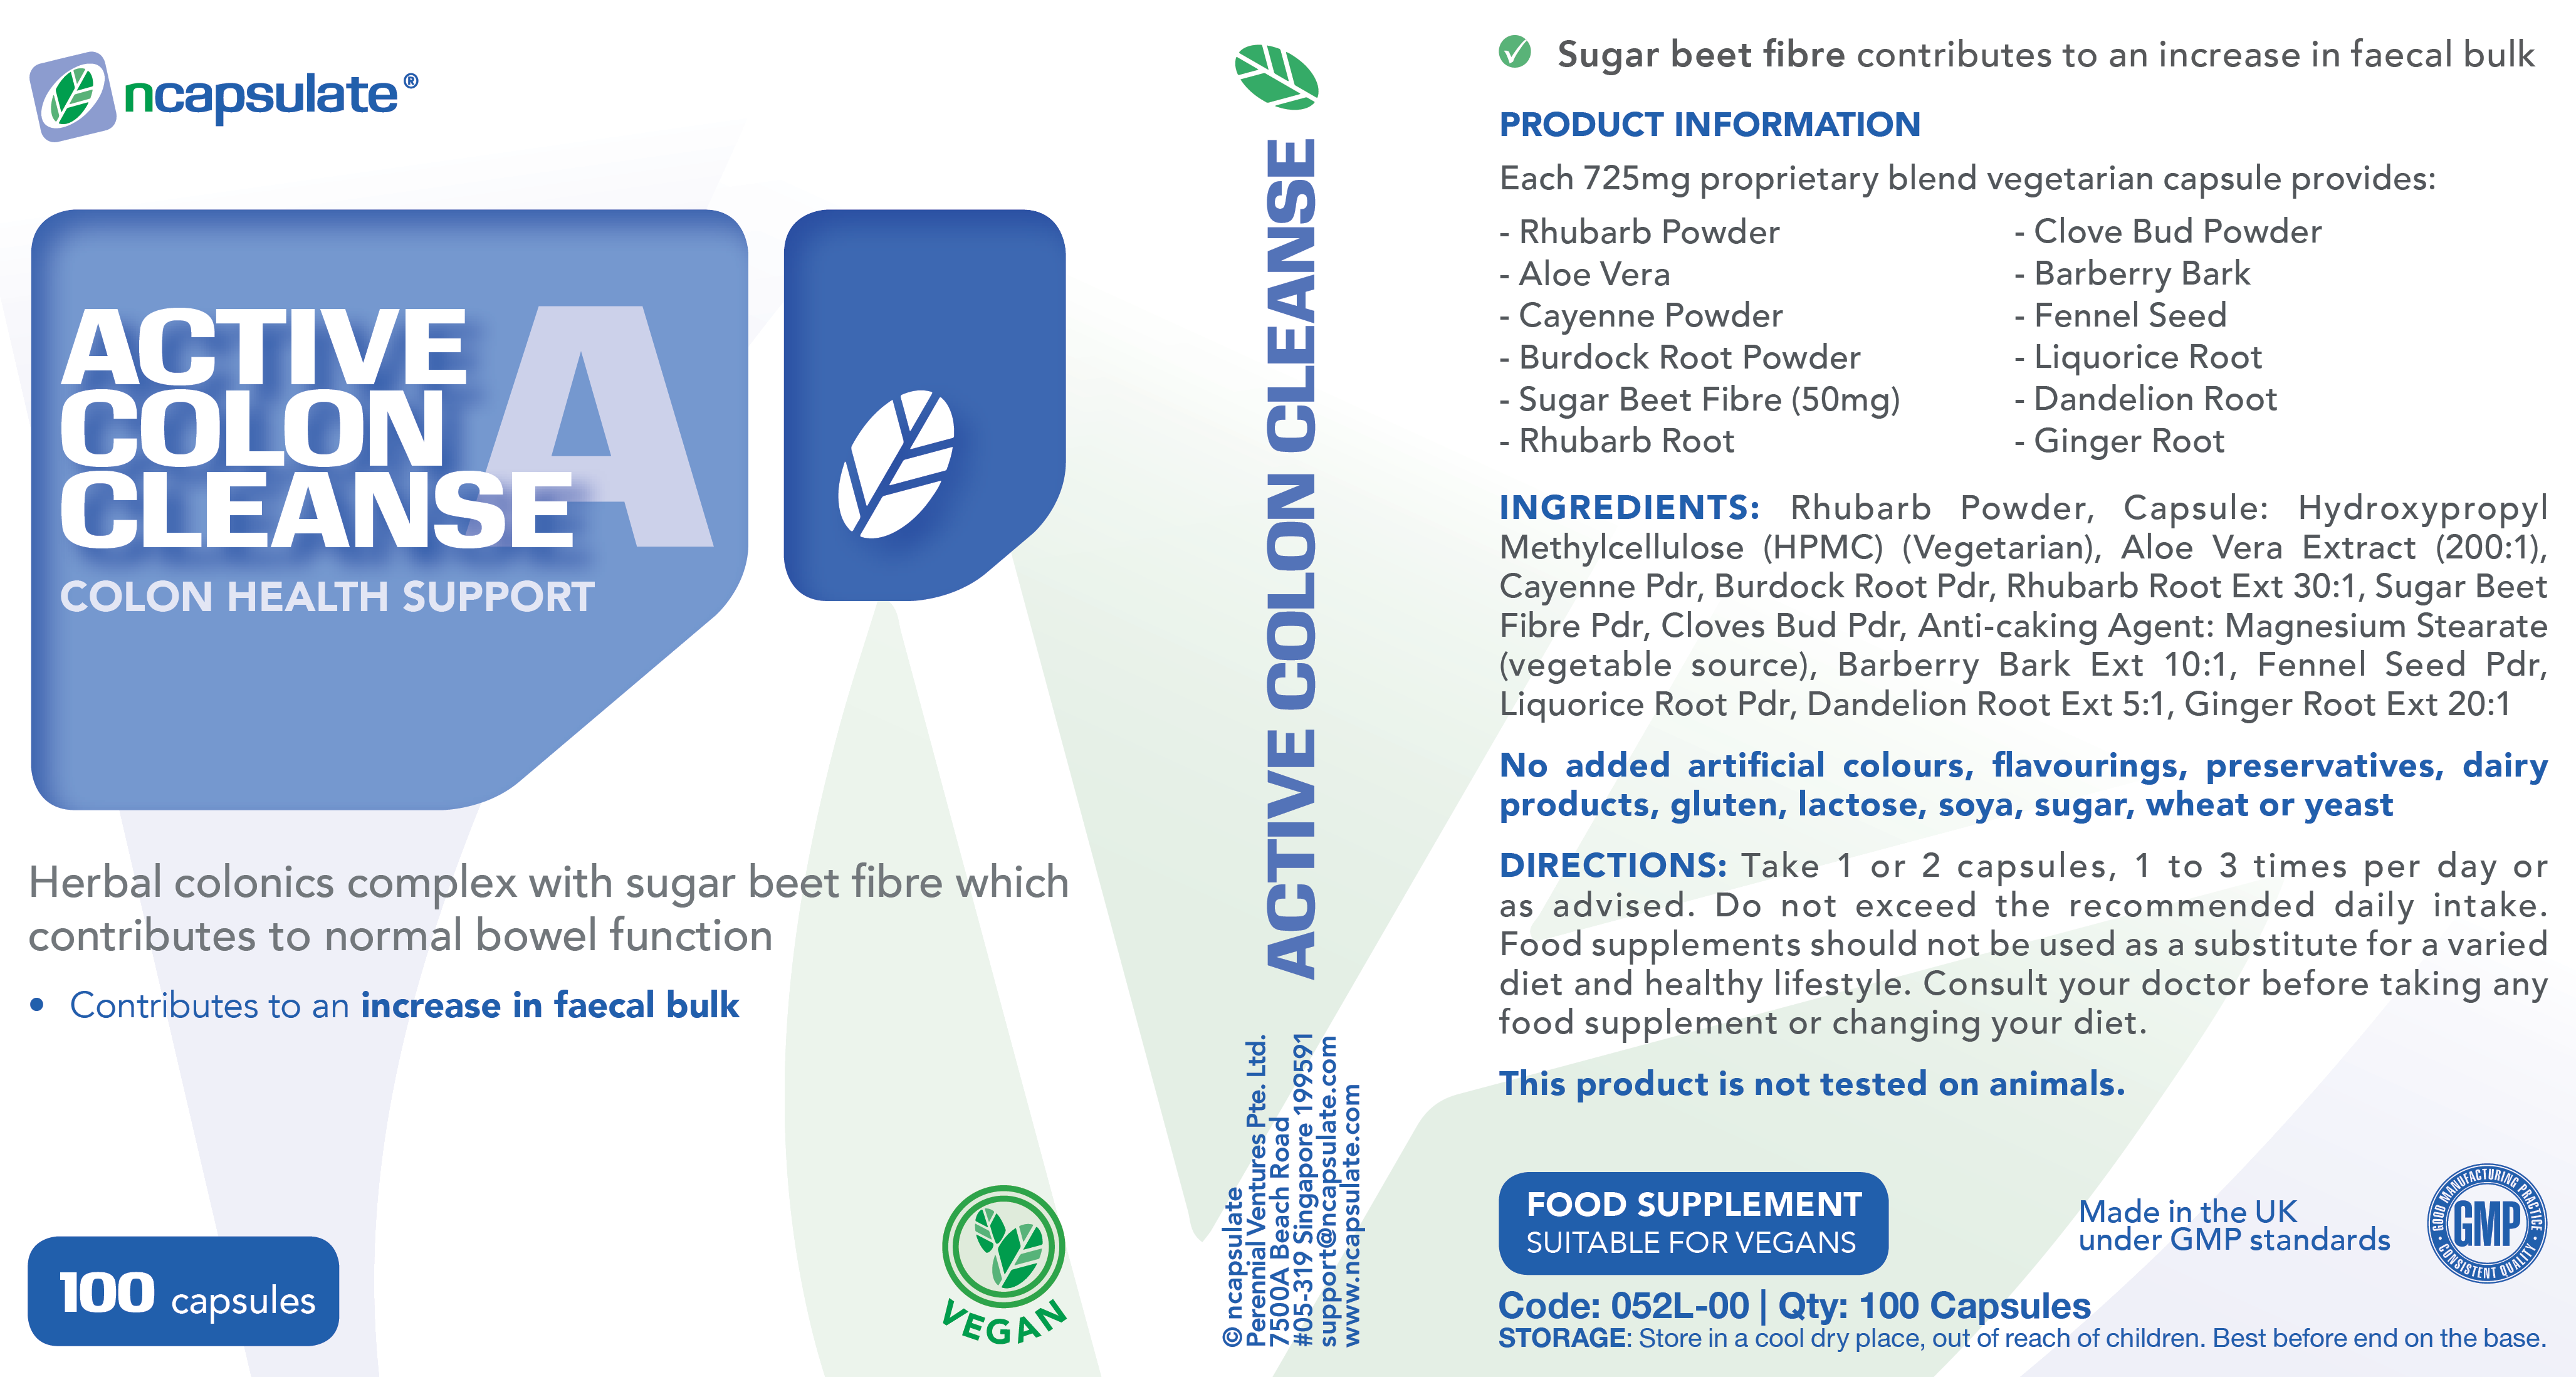 ncapsulate® ACTIVE COLON CLEANSE Premium Health Supplement Product Label